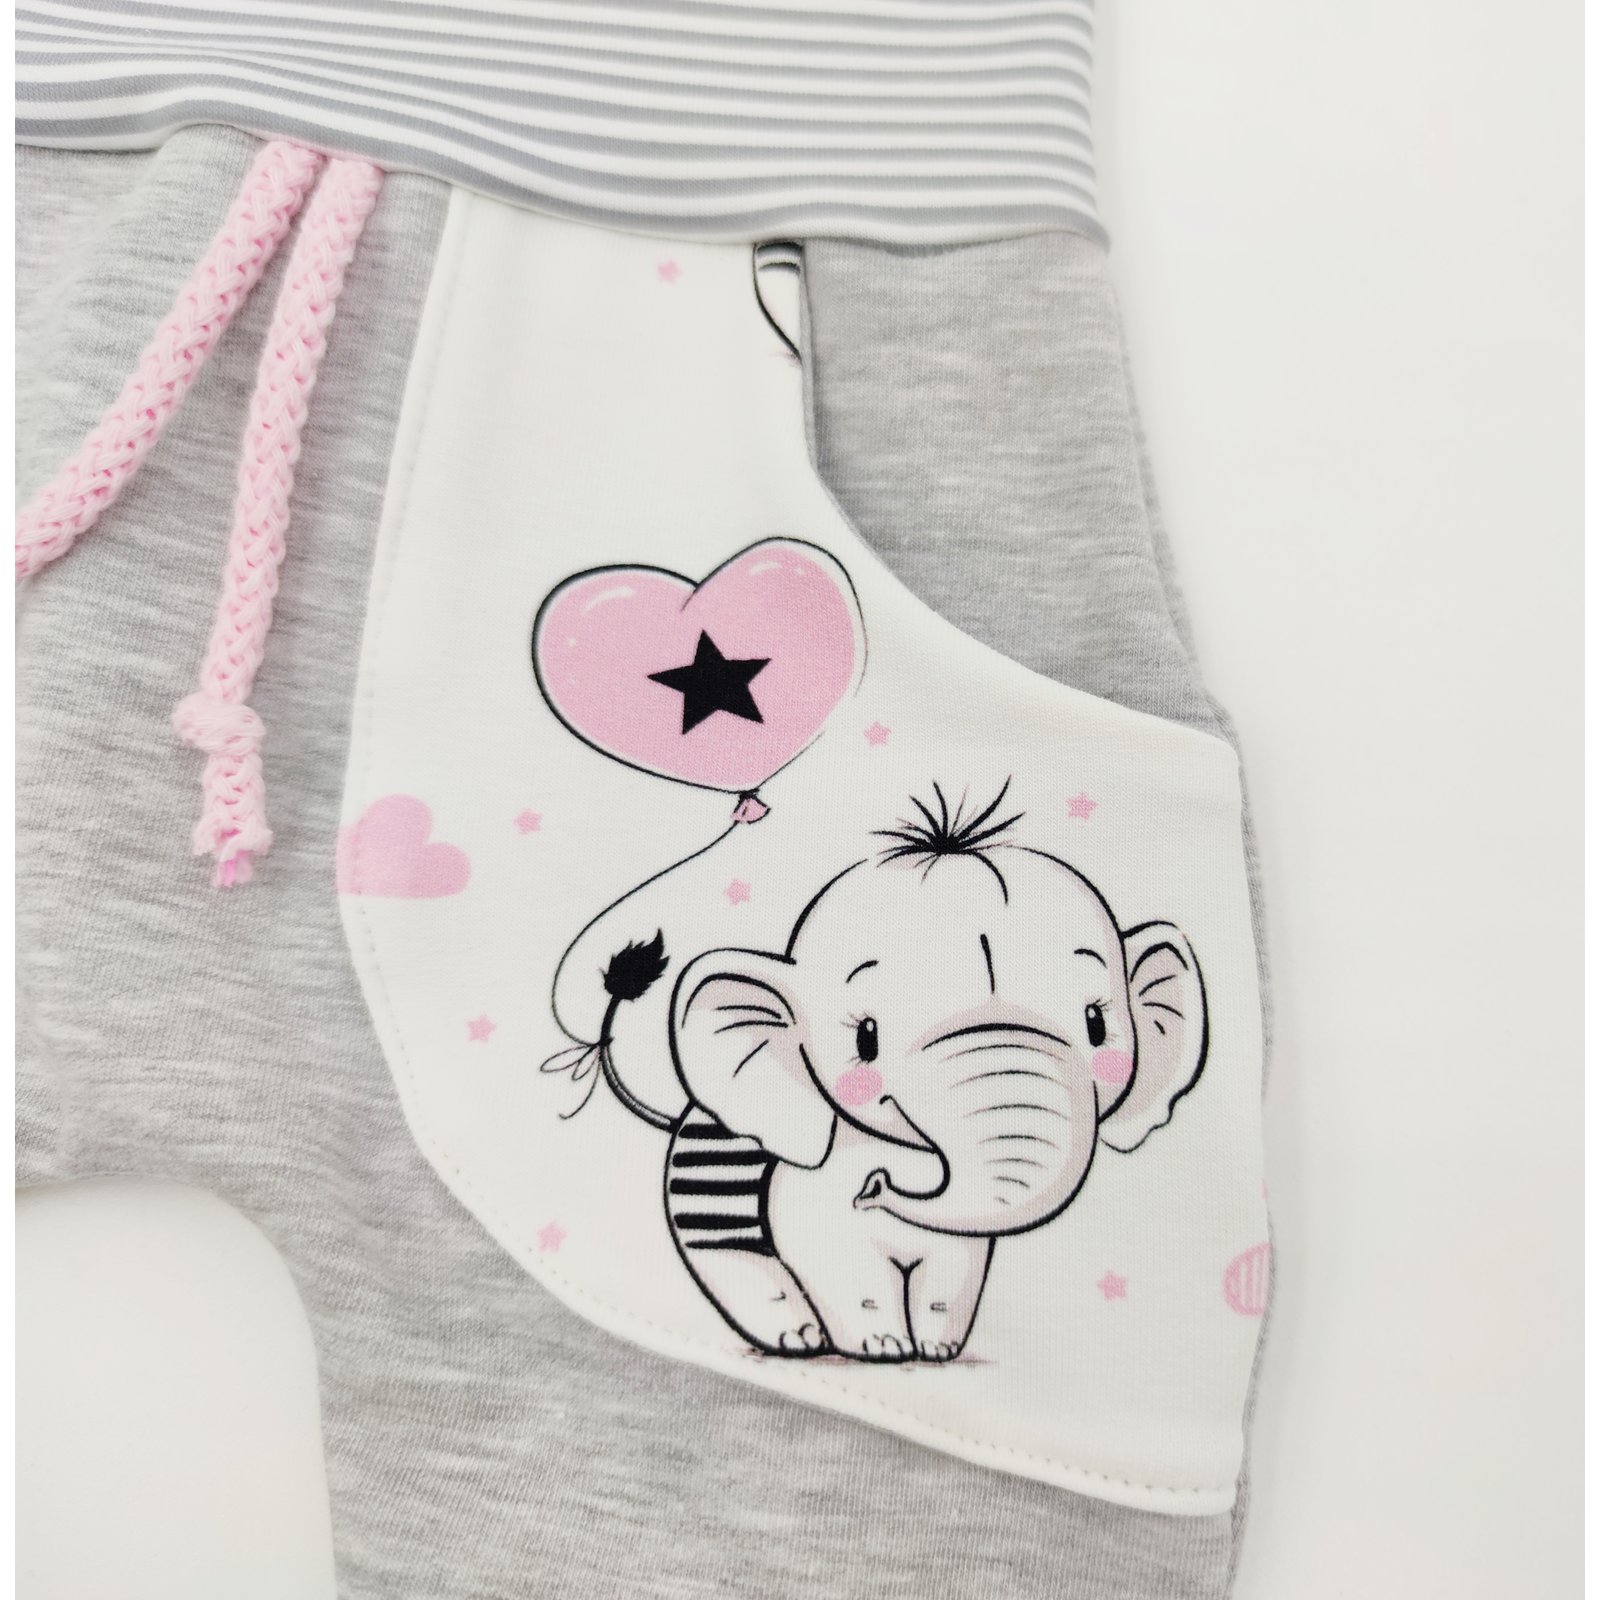 Baby Set Elefant Herz grau weiß Pumphose Mütze Halstuch Geschenkset Handmade Puschel-Design® 